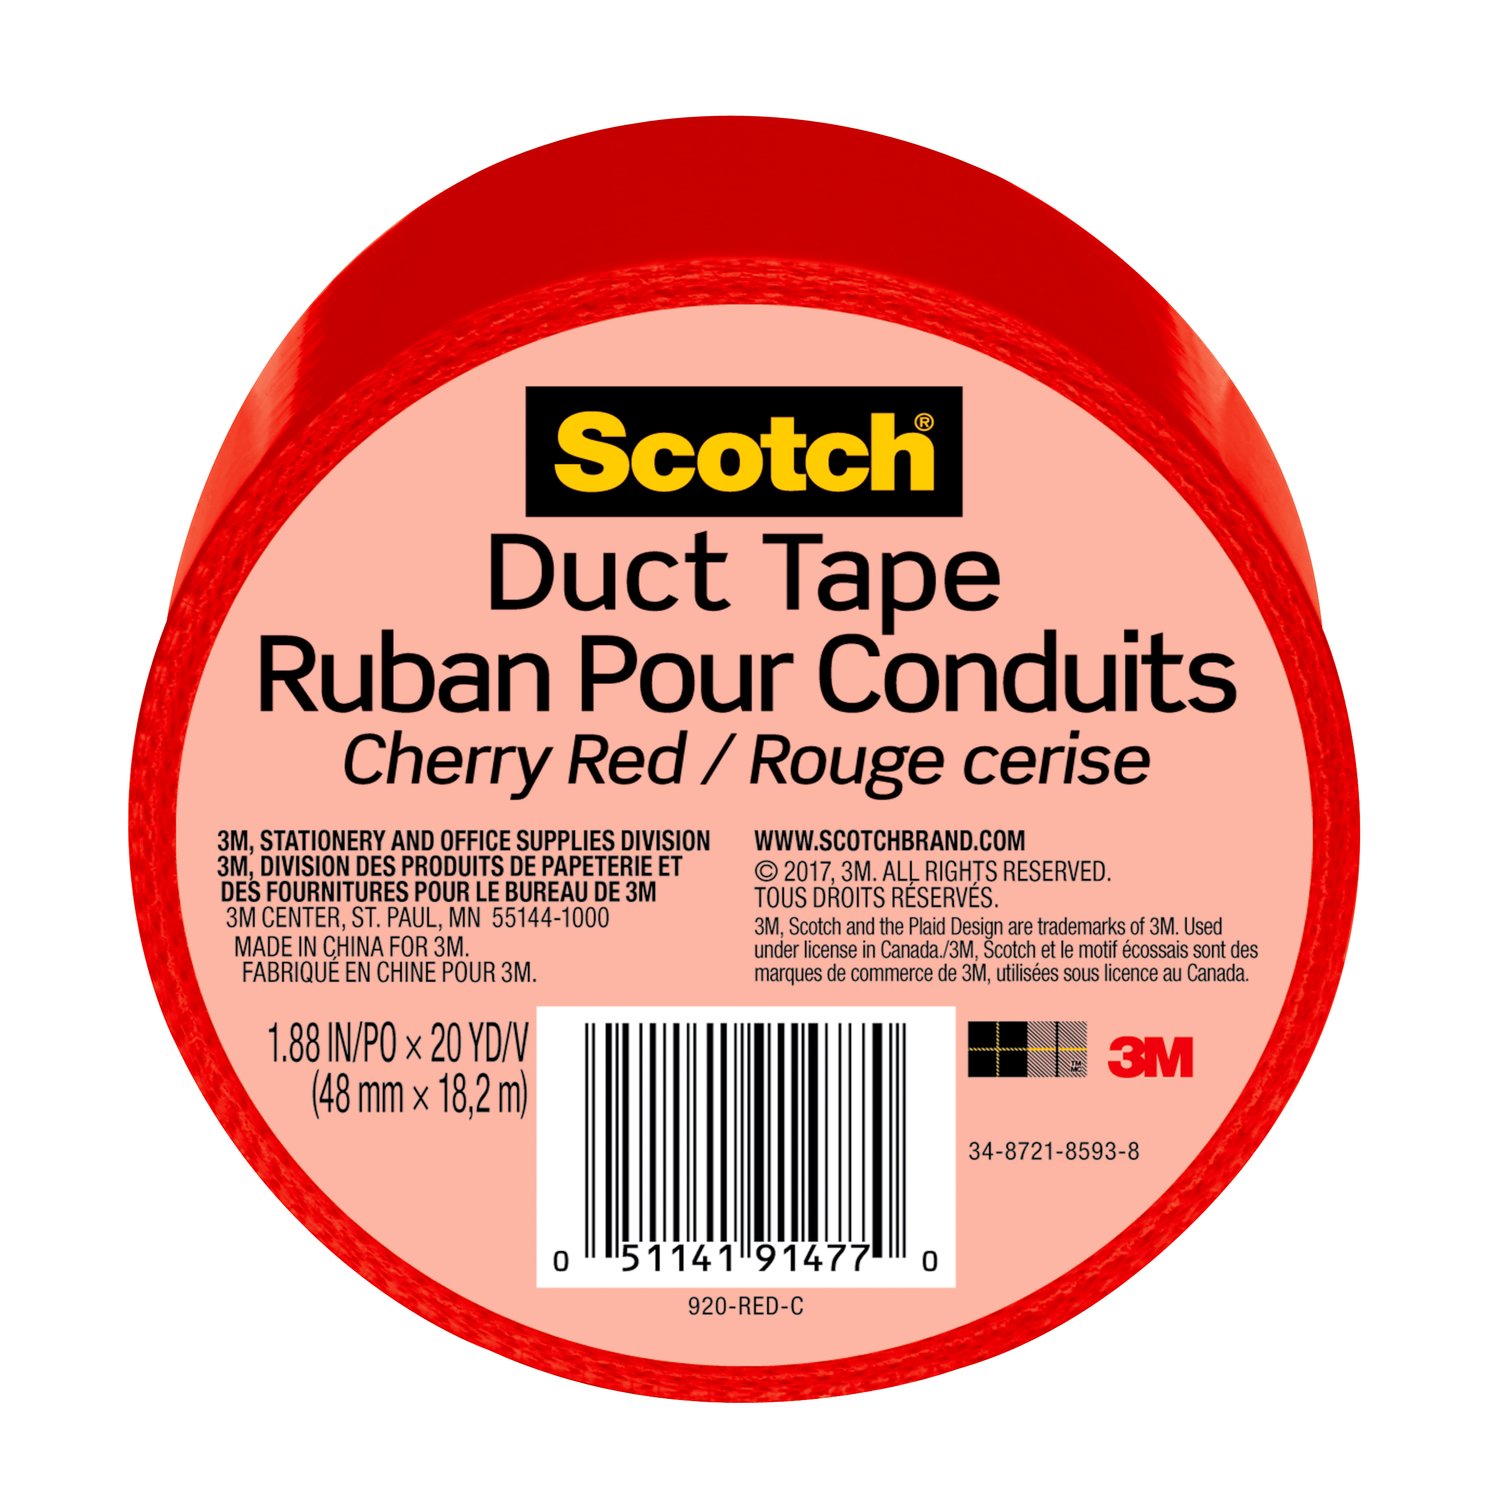 7100166639 - Scotch Duct Tape 920-RED-C, 1.88 in x 20 yd (48 mm x 18,2 m), Red